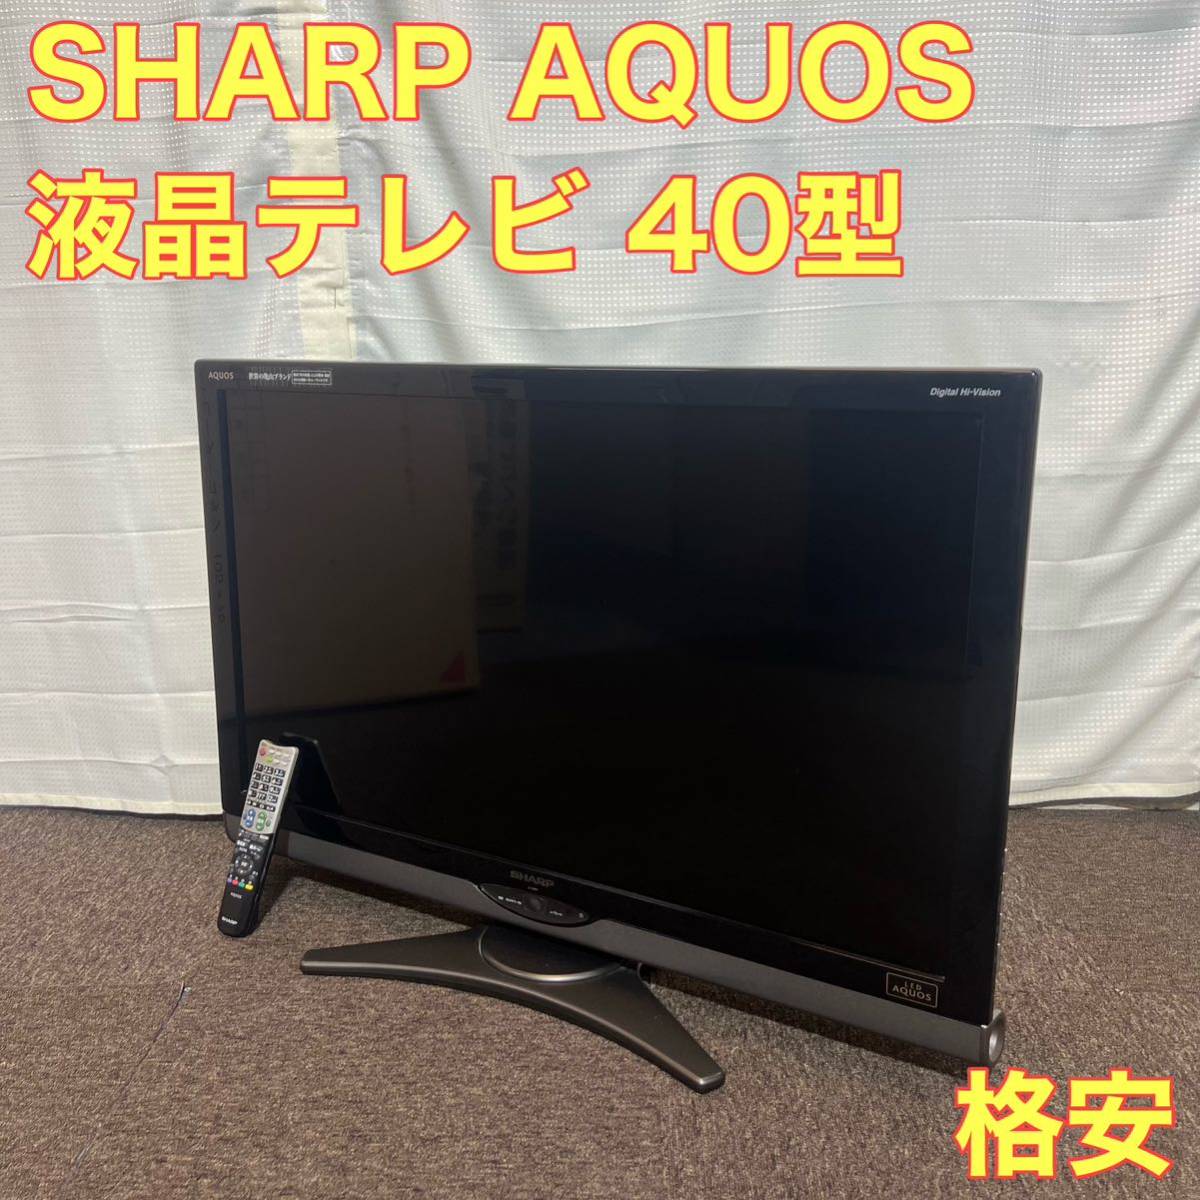 SHARP AQUOS LC-40SE1 液晶テレビ LED 2010年製 - 映像機器